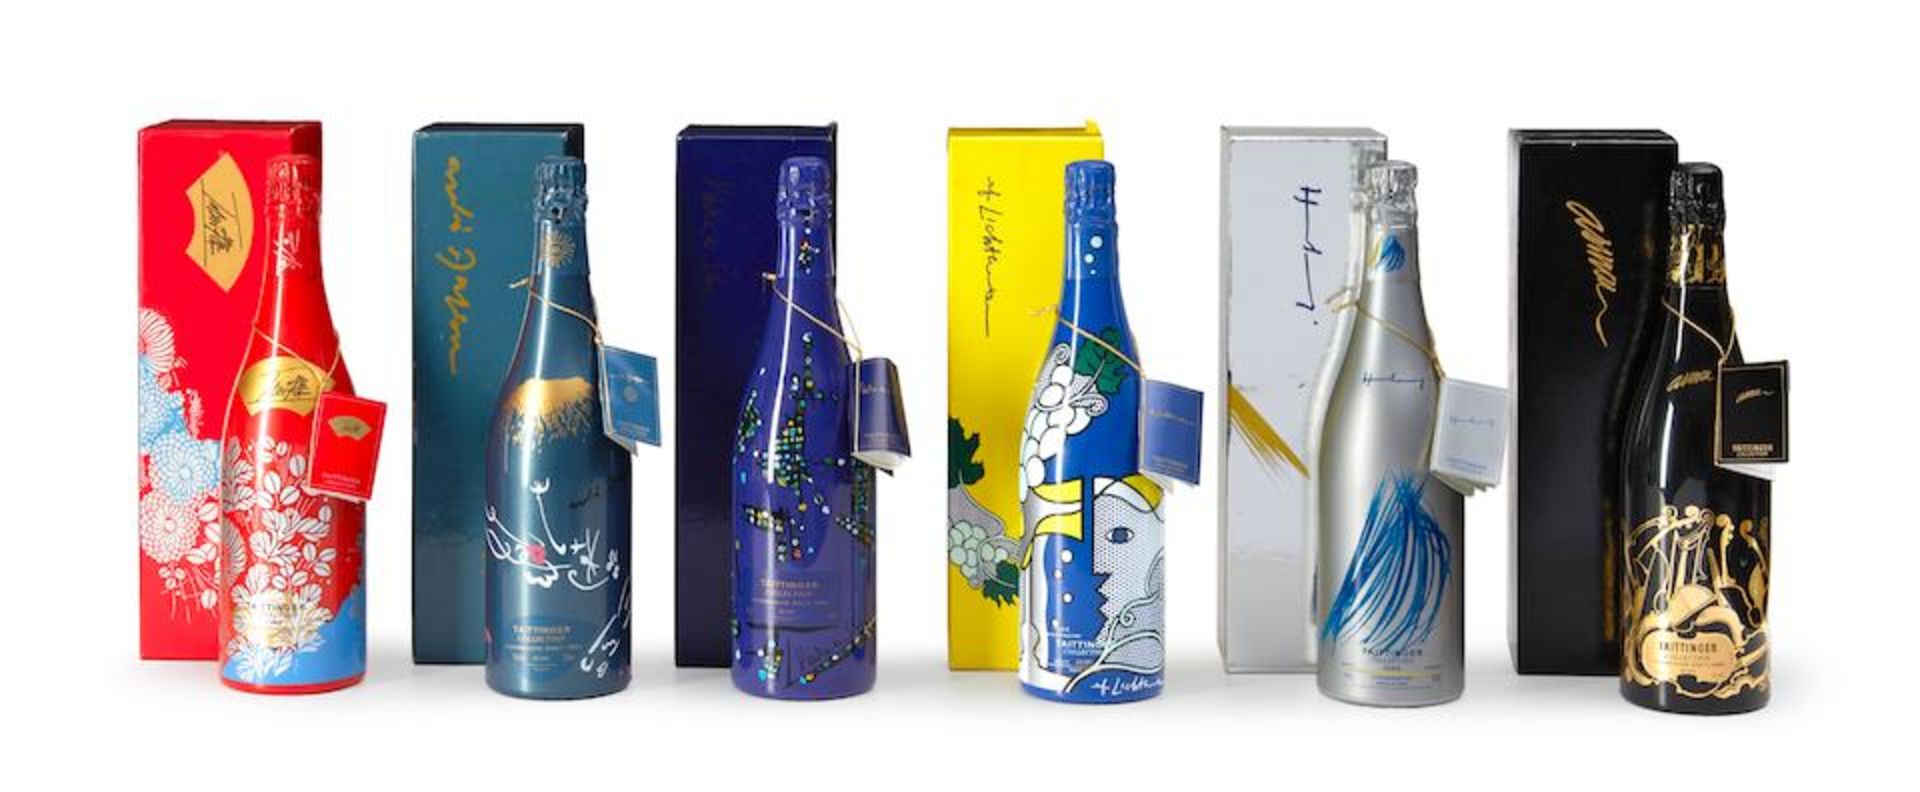 Taittinger Collection 1985-1994 Releases (6 bottles)